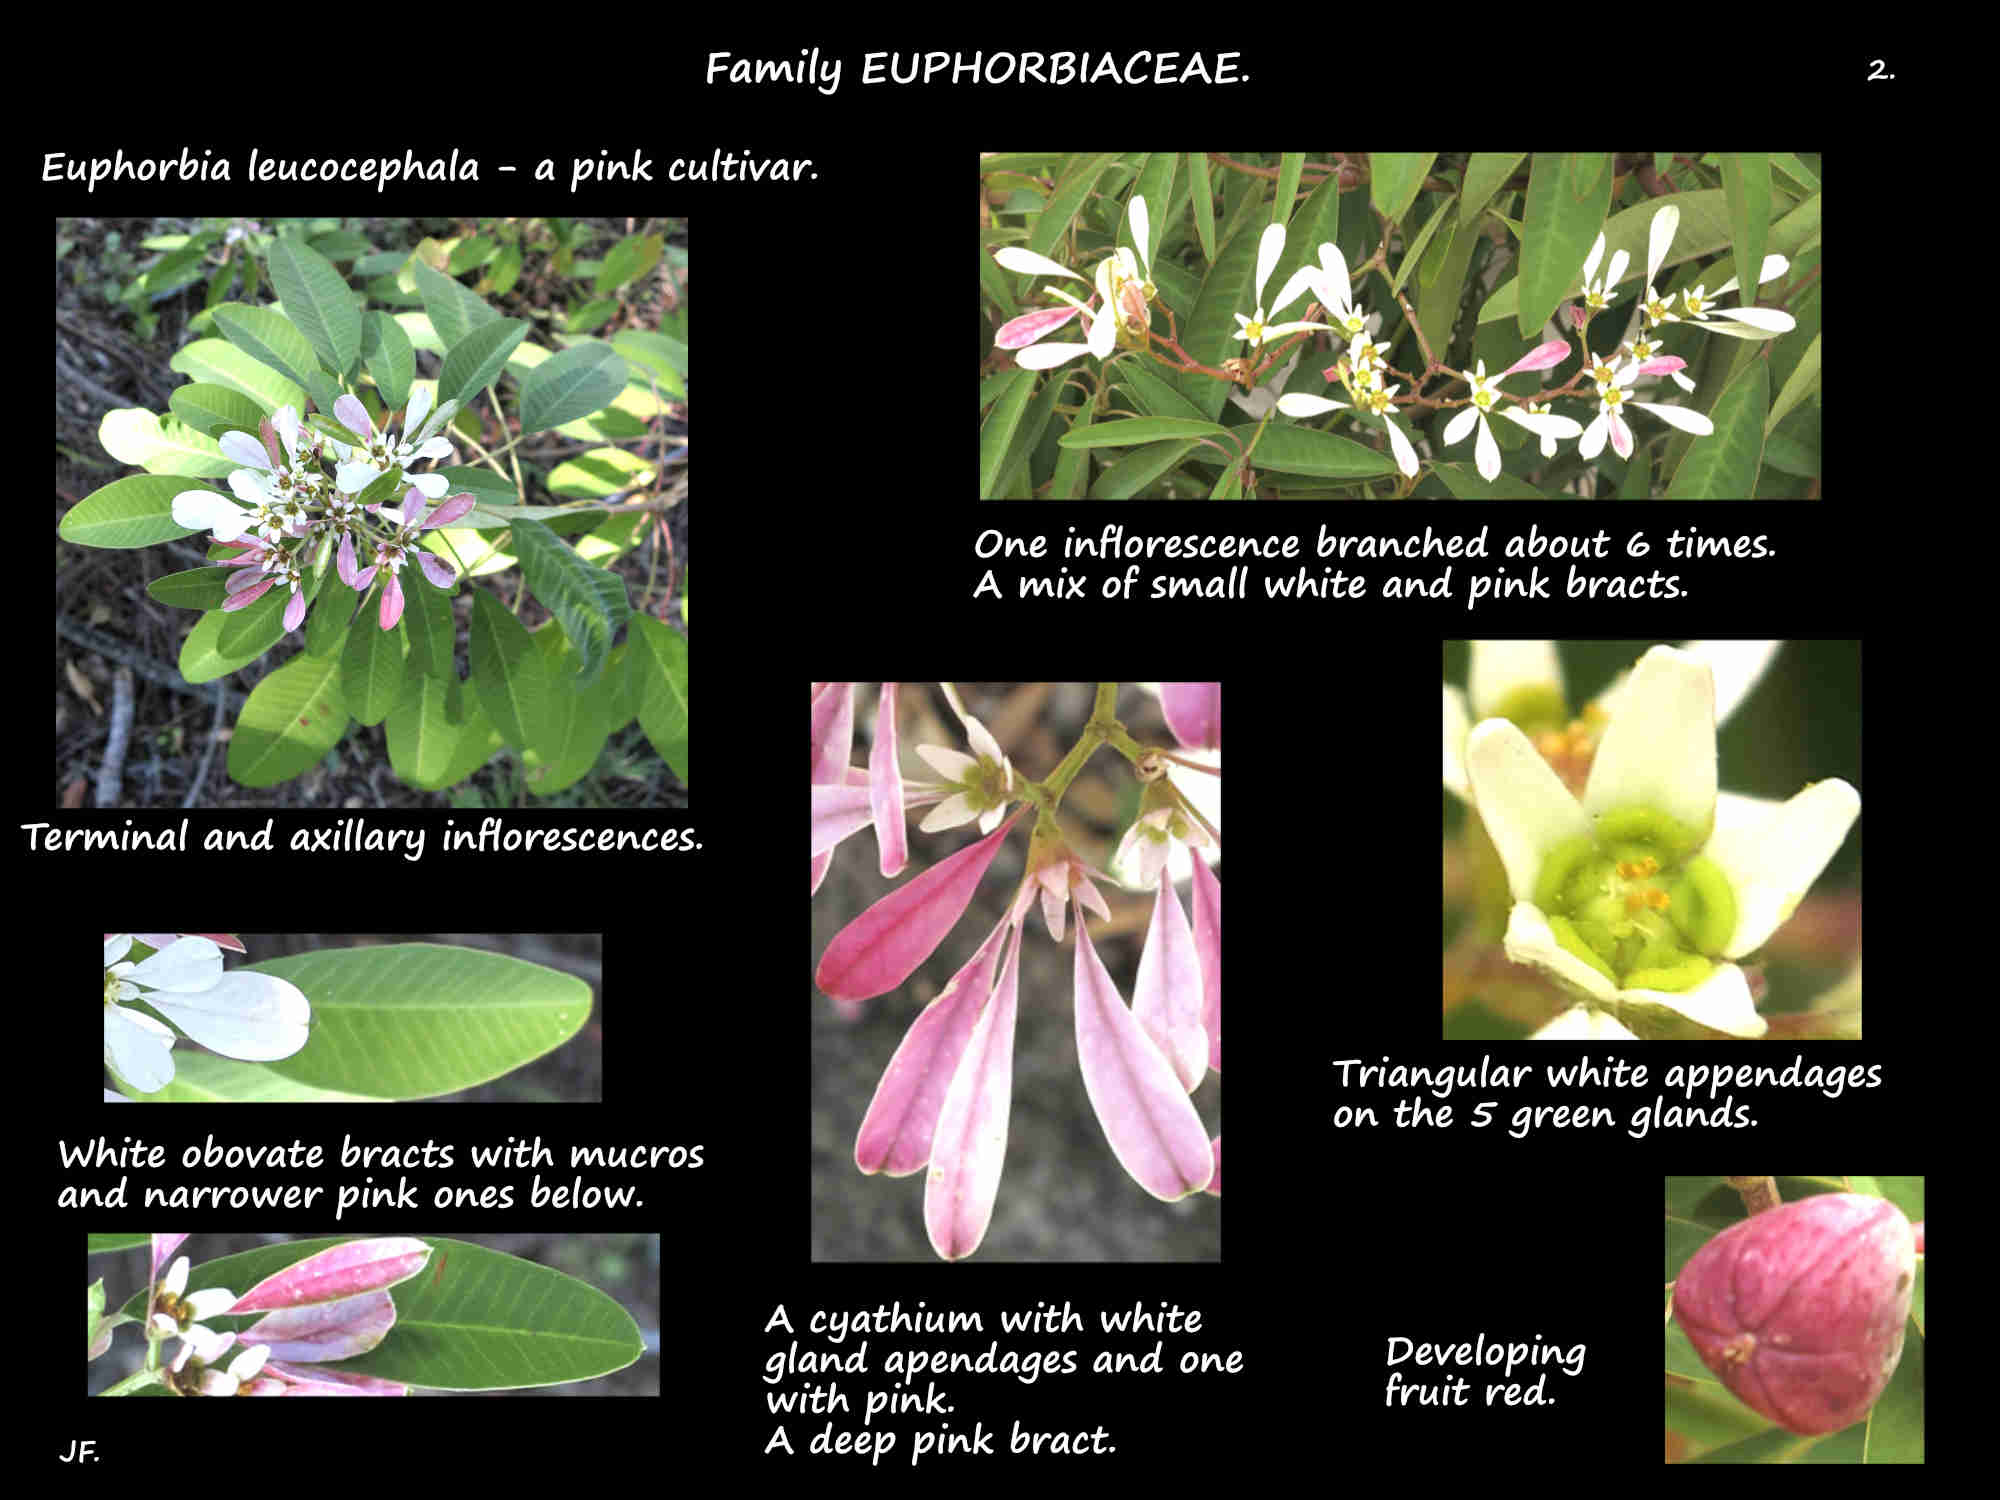 11 Pink Euphorbia leucocephala bracts & gland appendages